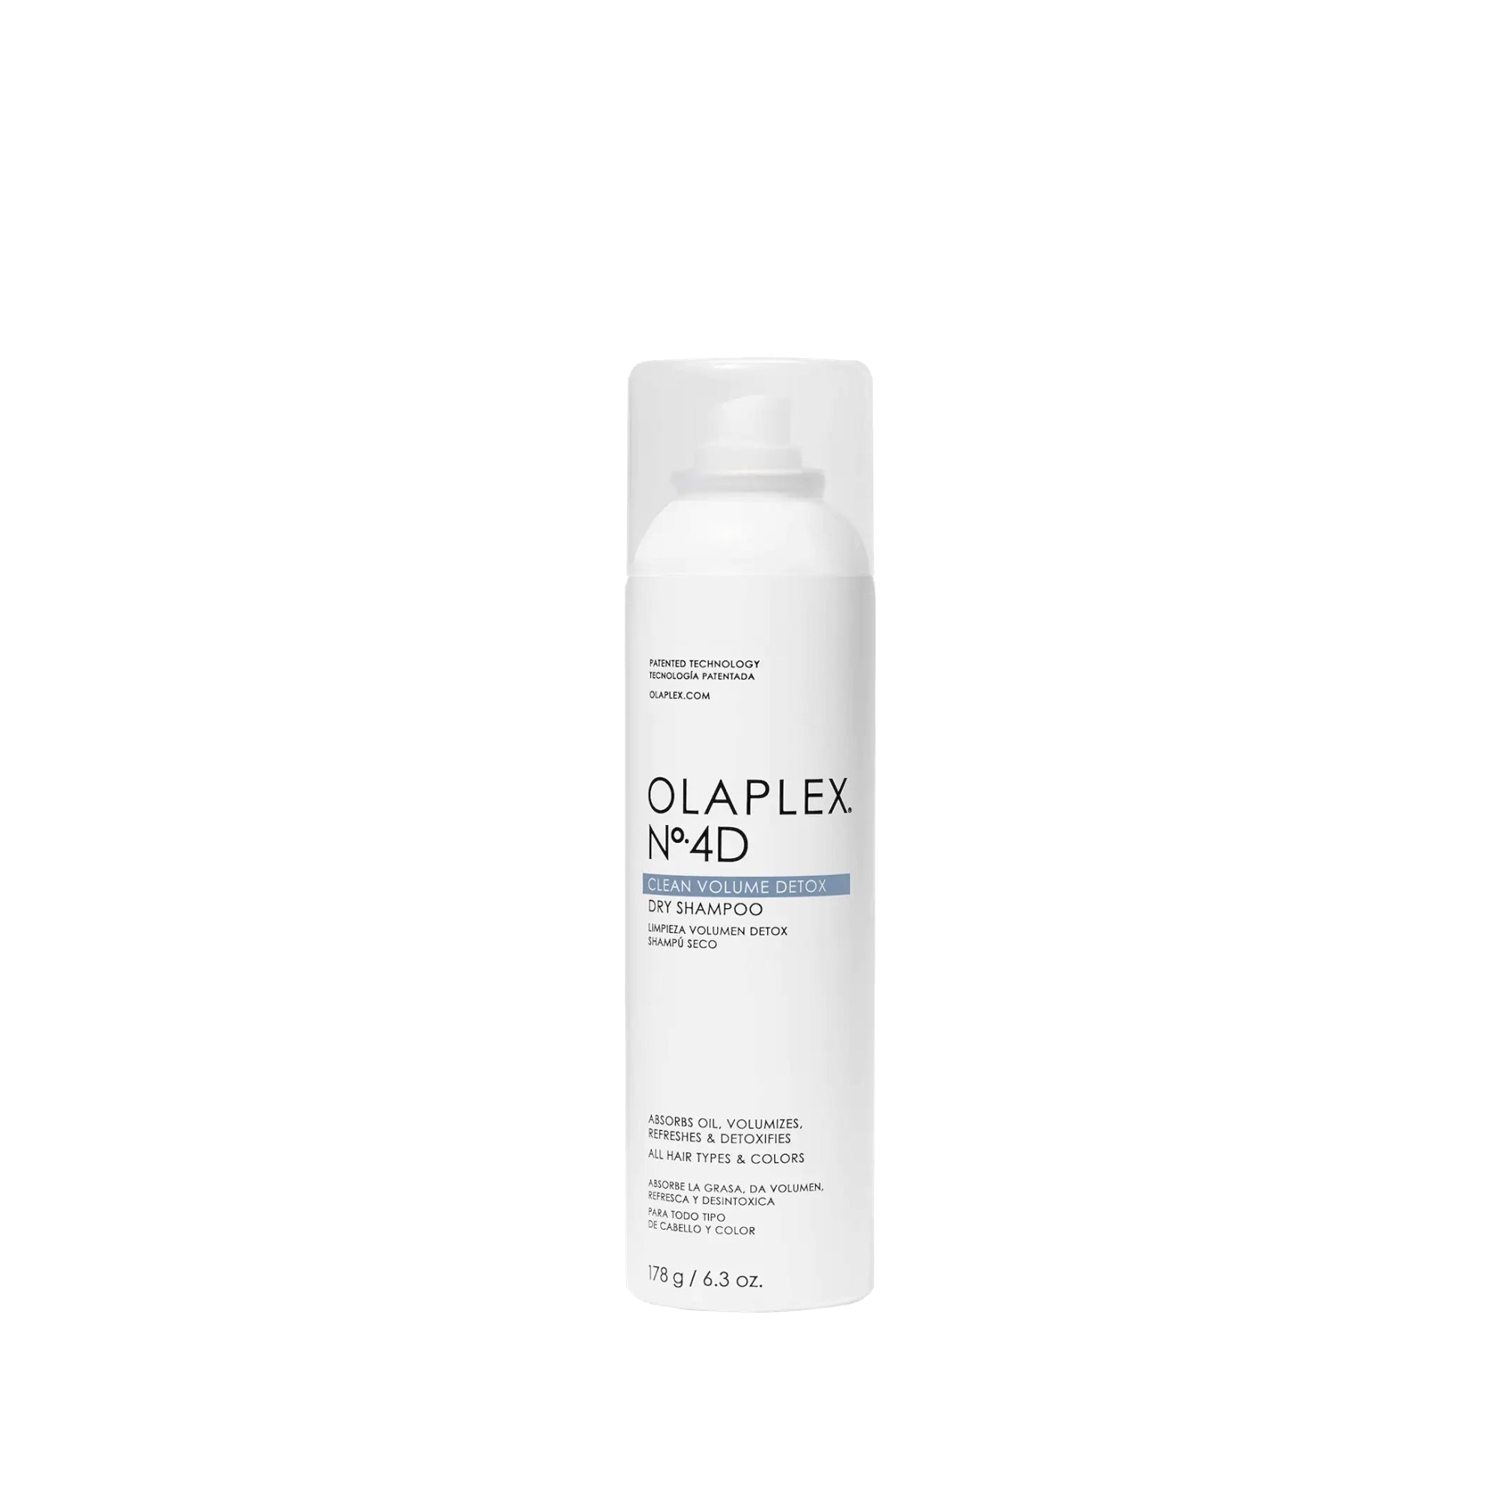 Olaplex No. 4D Clean Volume Detox Kuru Şampuan 178 g